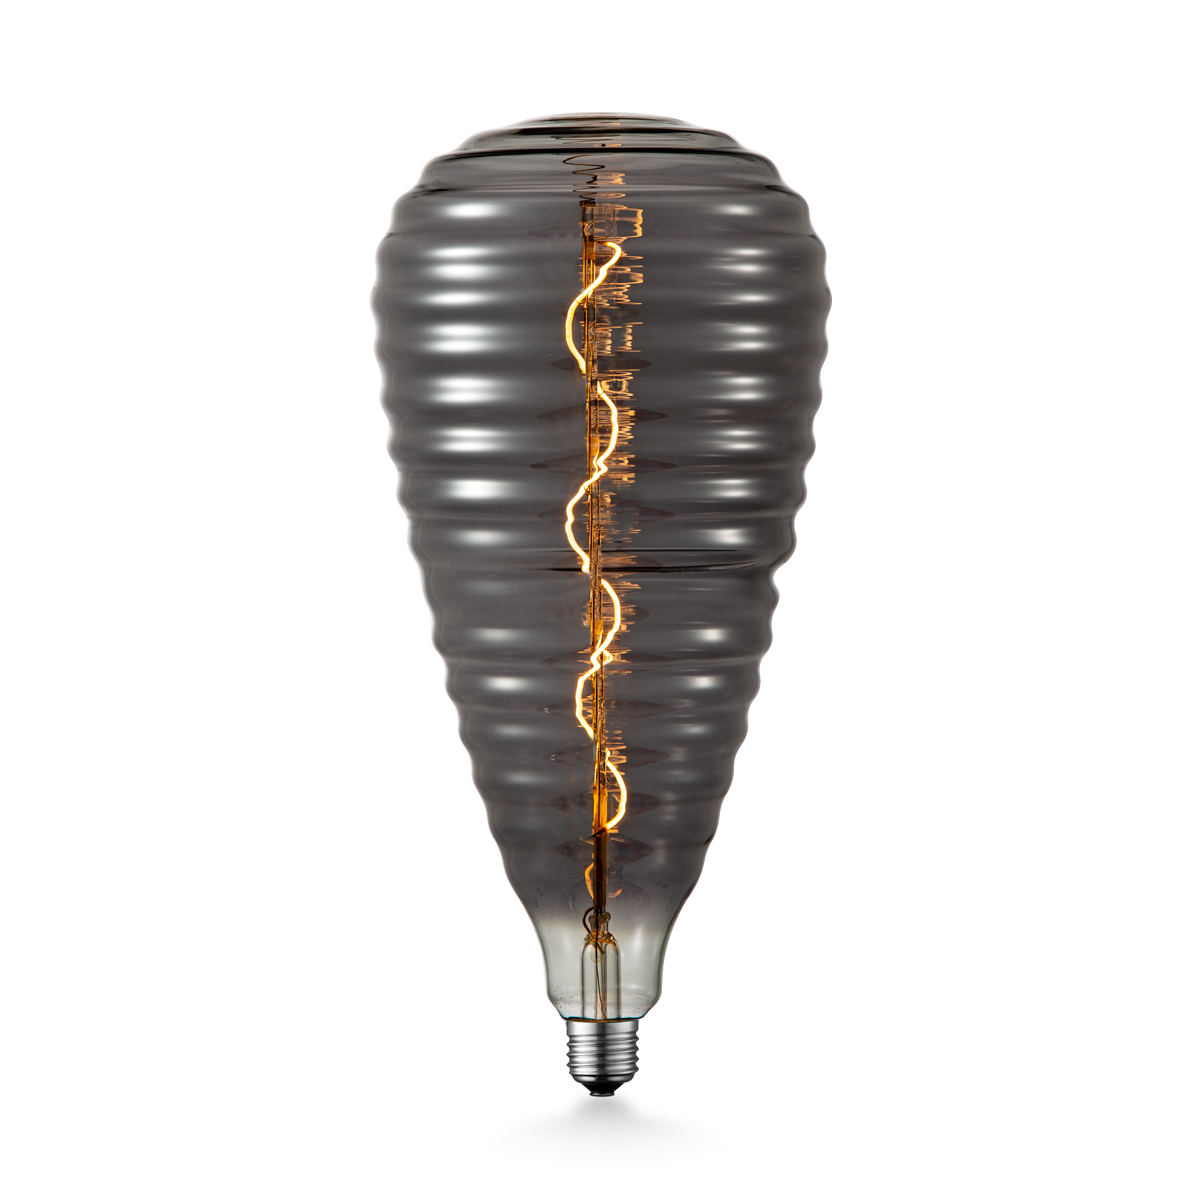 Tangla lighting - TLB-8057-04TM - LED Light Bulb Single Spiral filament - special 4W titanium - pupa - dimmable - E27